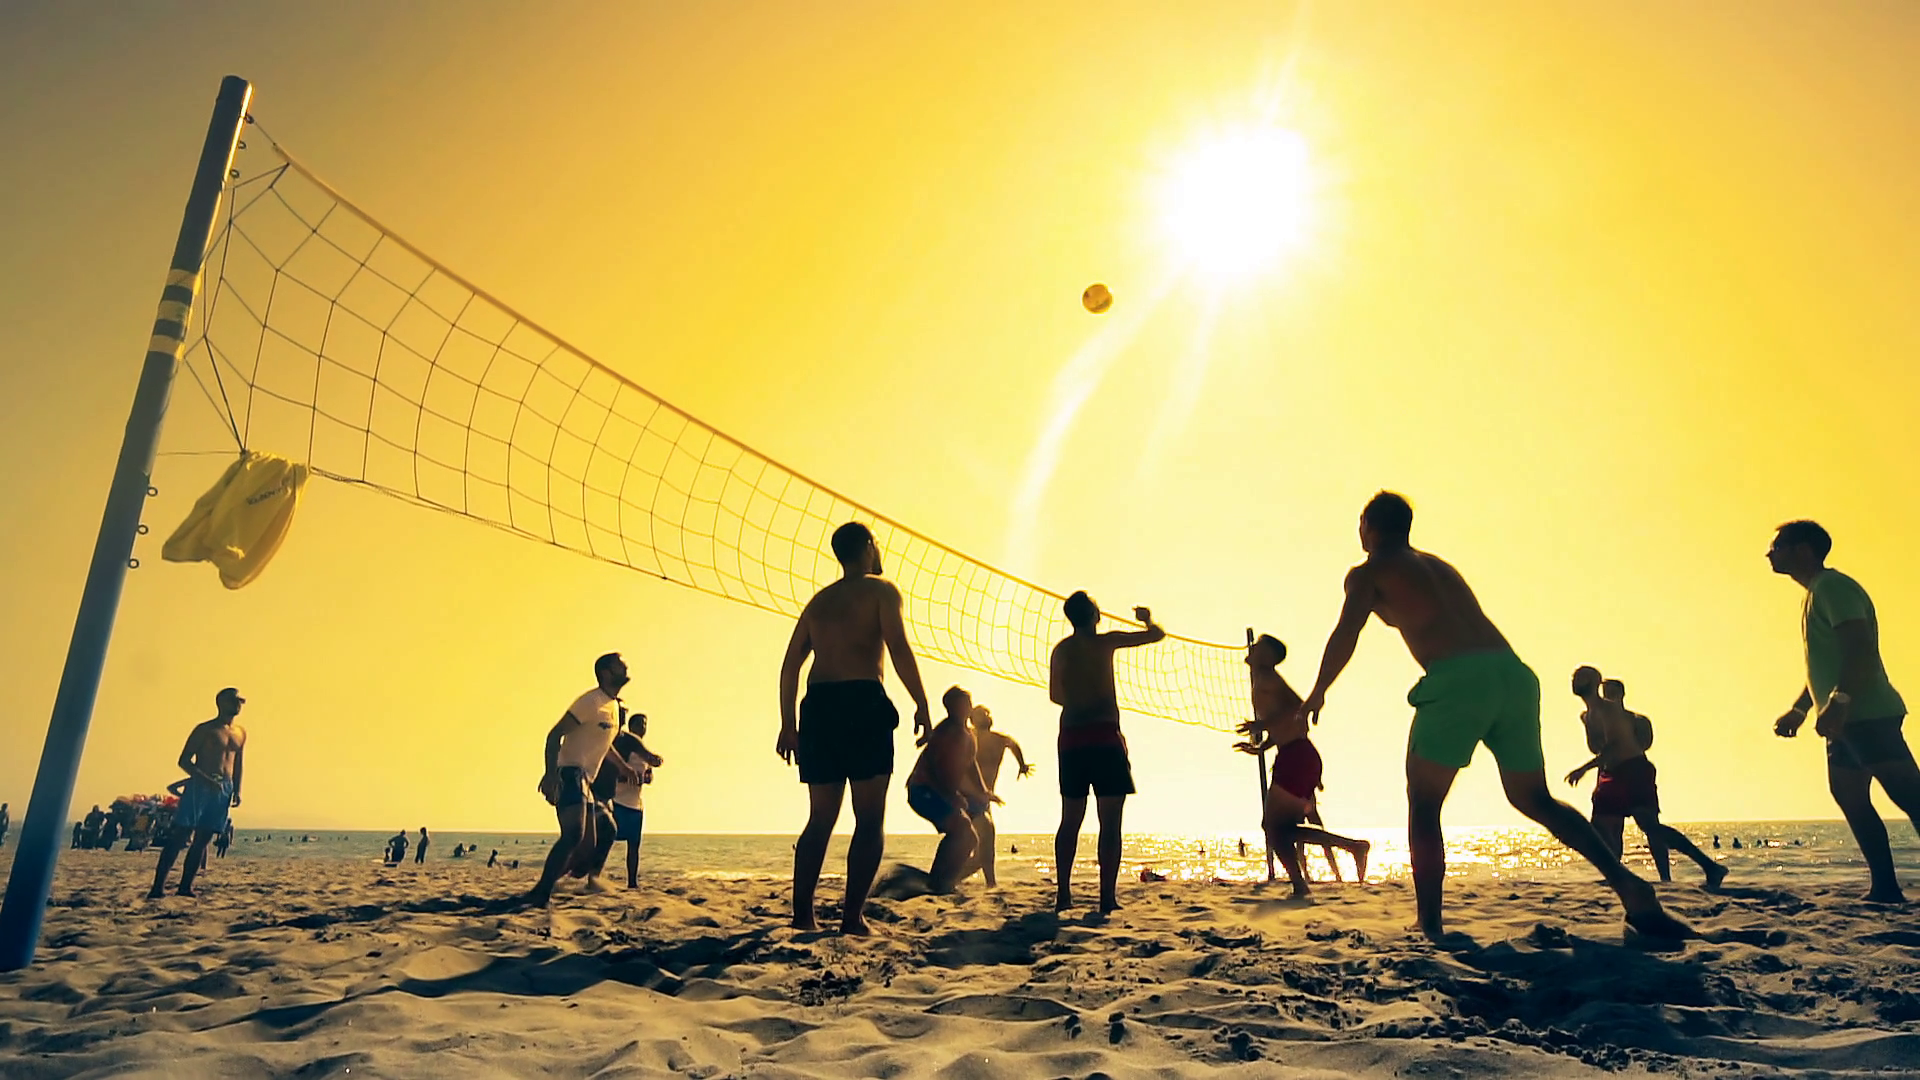 What sports you enjoy doing. Волейбол на пляже. Пляжный волейбол. Волейбол семья. Пляж волейбол фон.